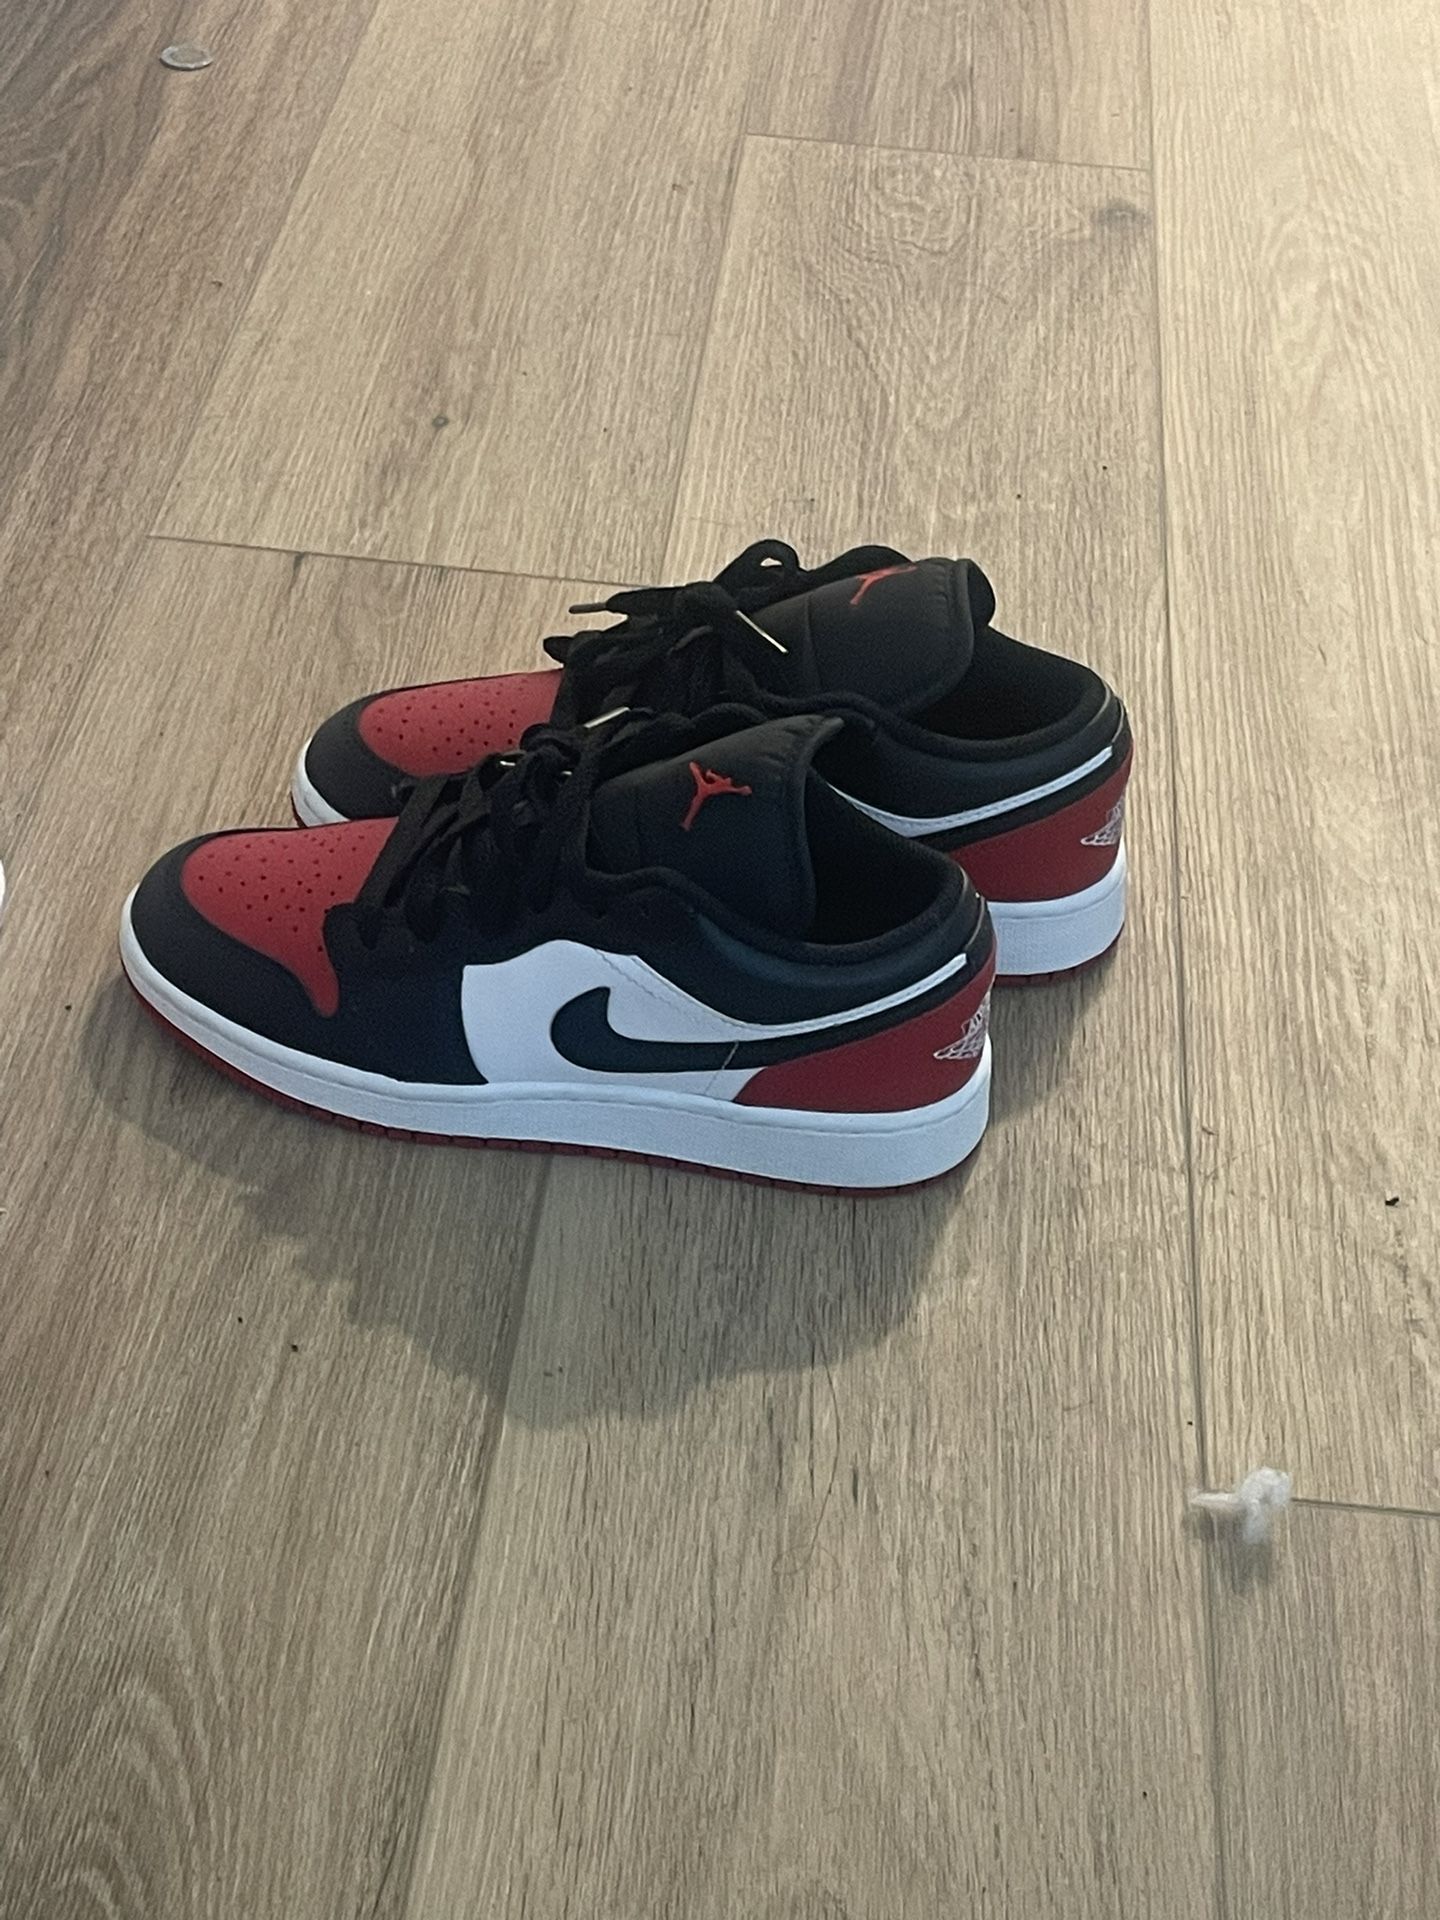 Nike/jordans 1’s